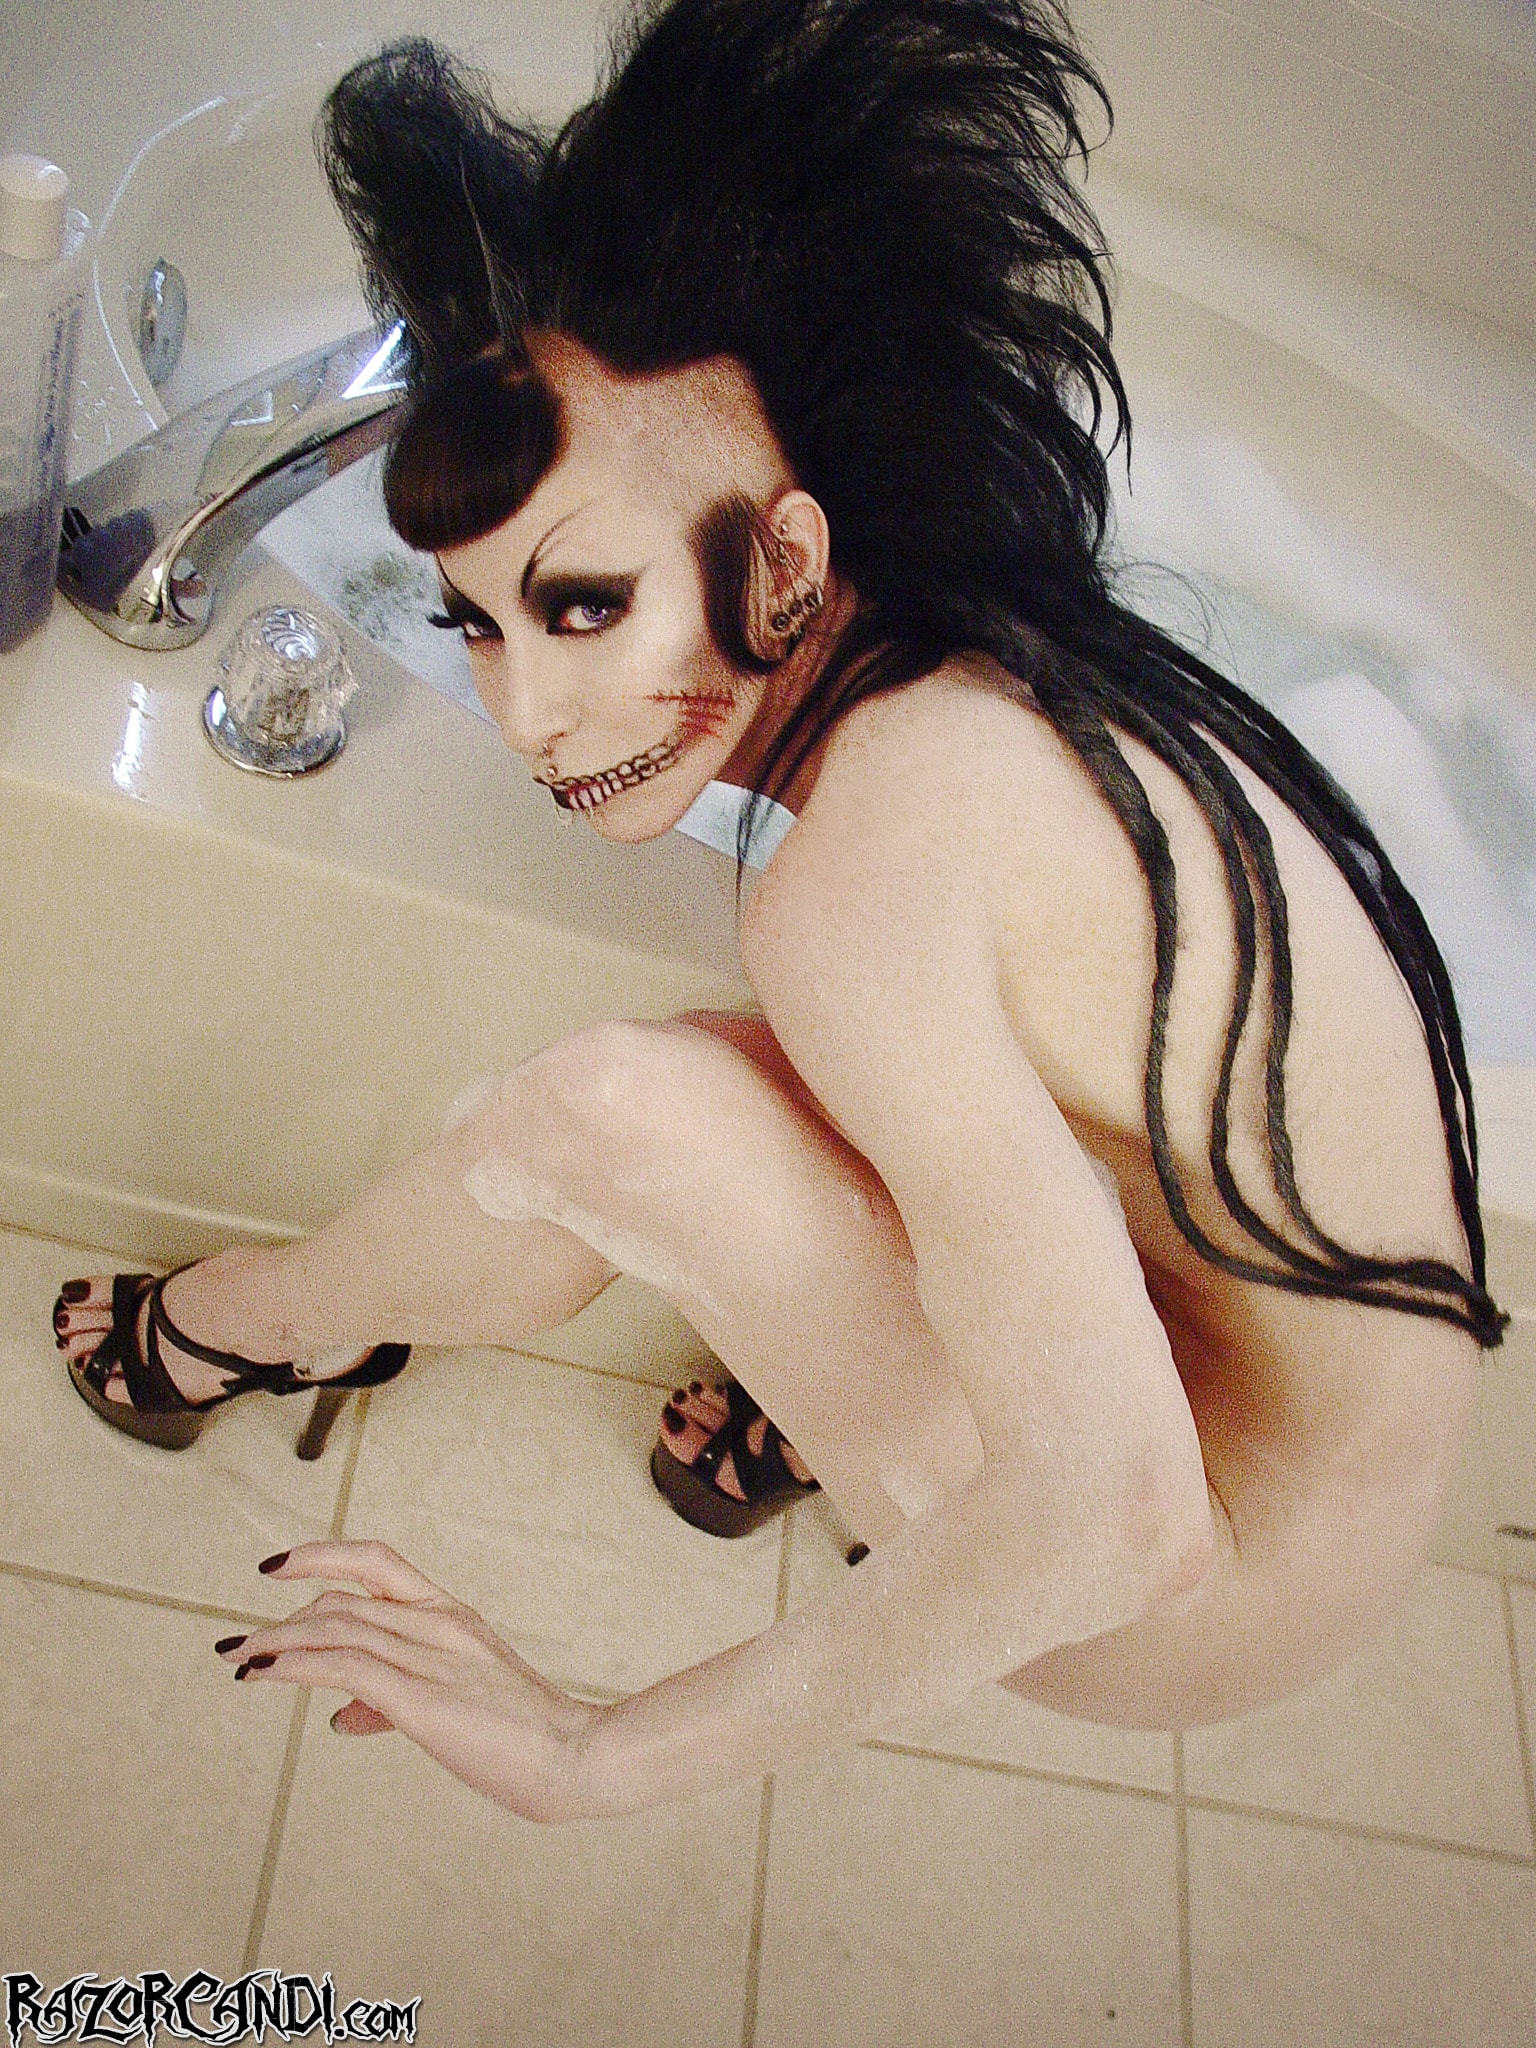 Razor Candi 'Classic Gothic Deathrock Beauty in Bubble Bath' starring Razor Candi (Photo 14)